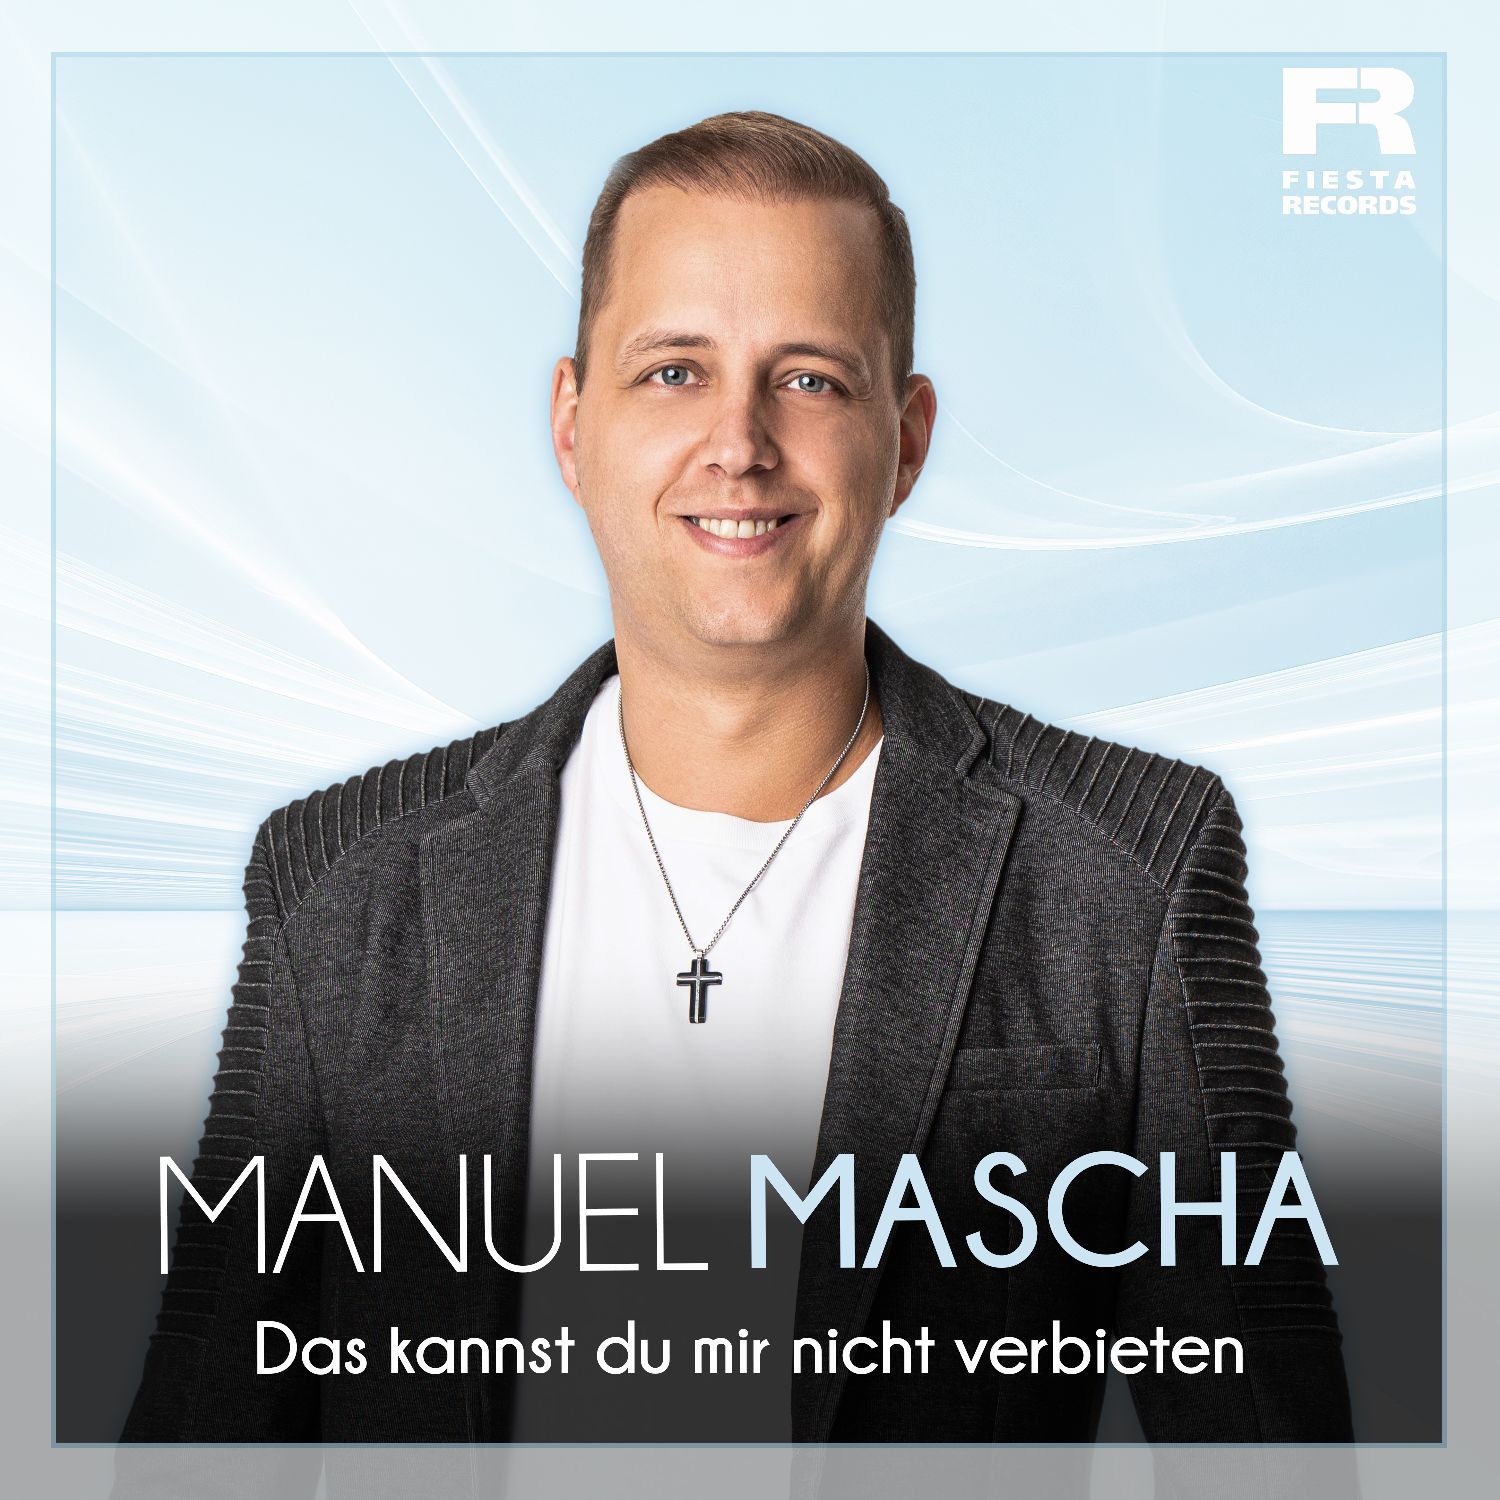 Manuel Mascha - Das kannst du mir nicht verbieten